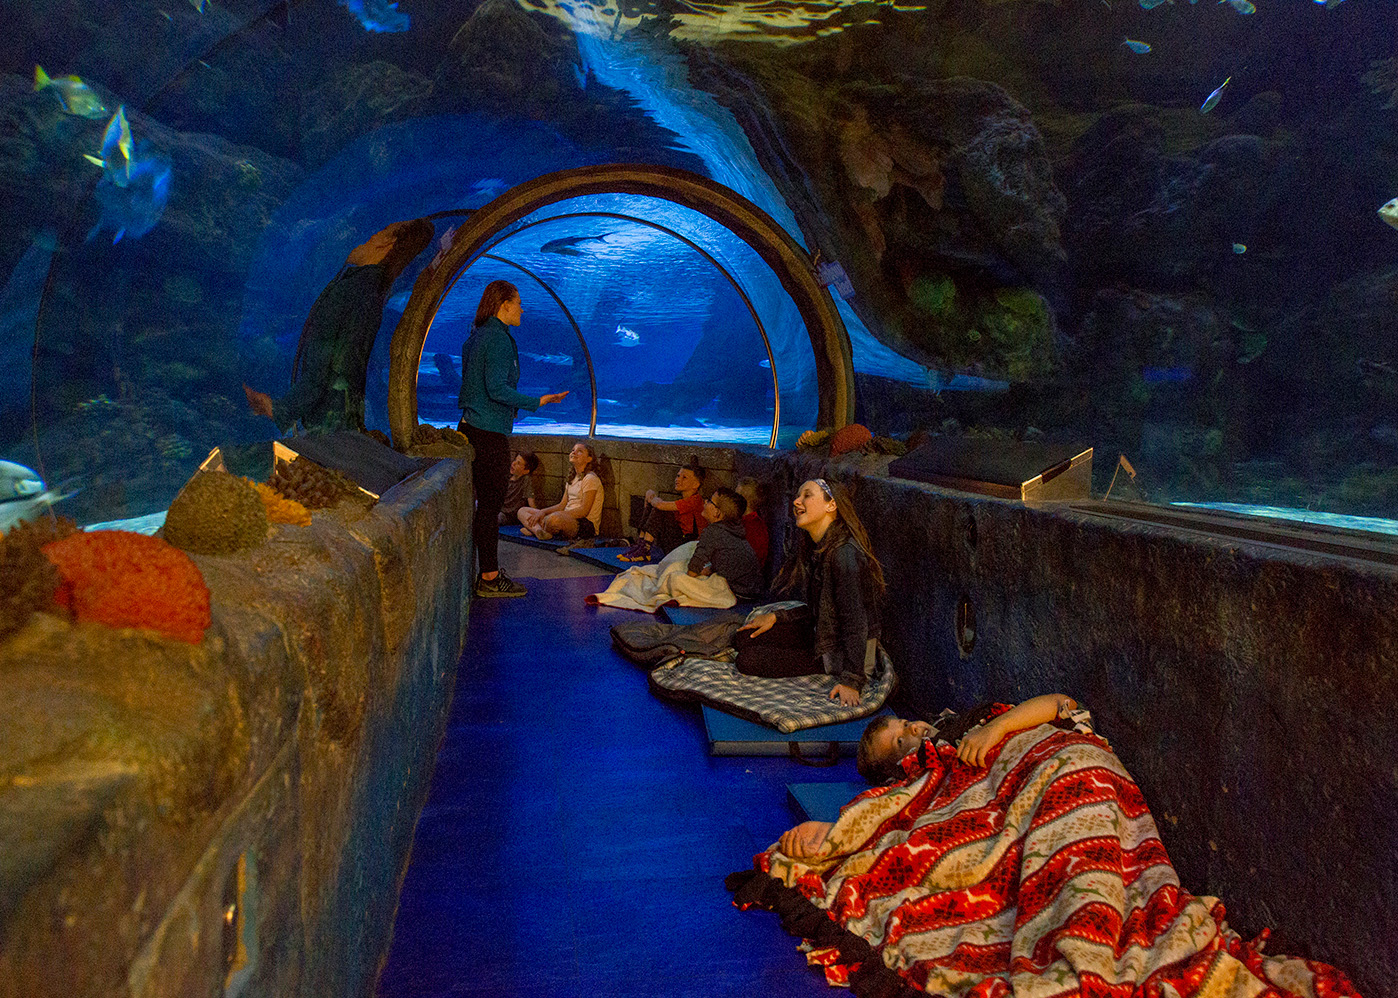 Sleep Under the Sea | SEA LIFE at Mall of America